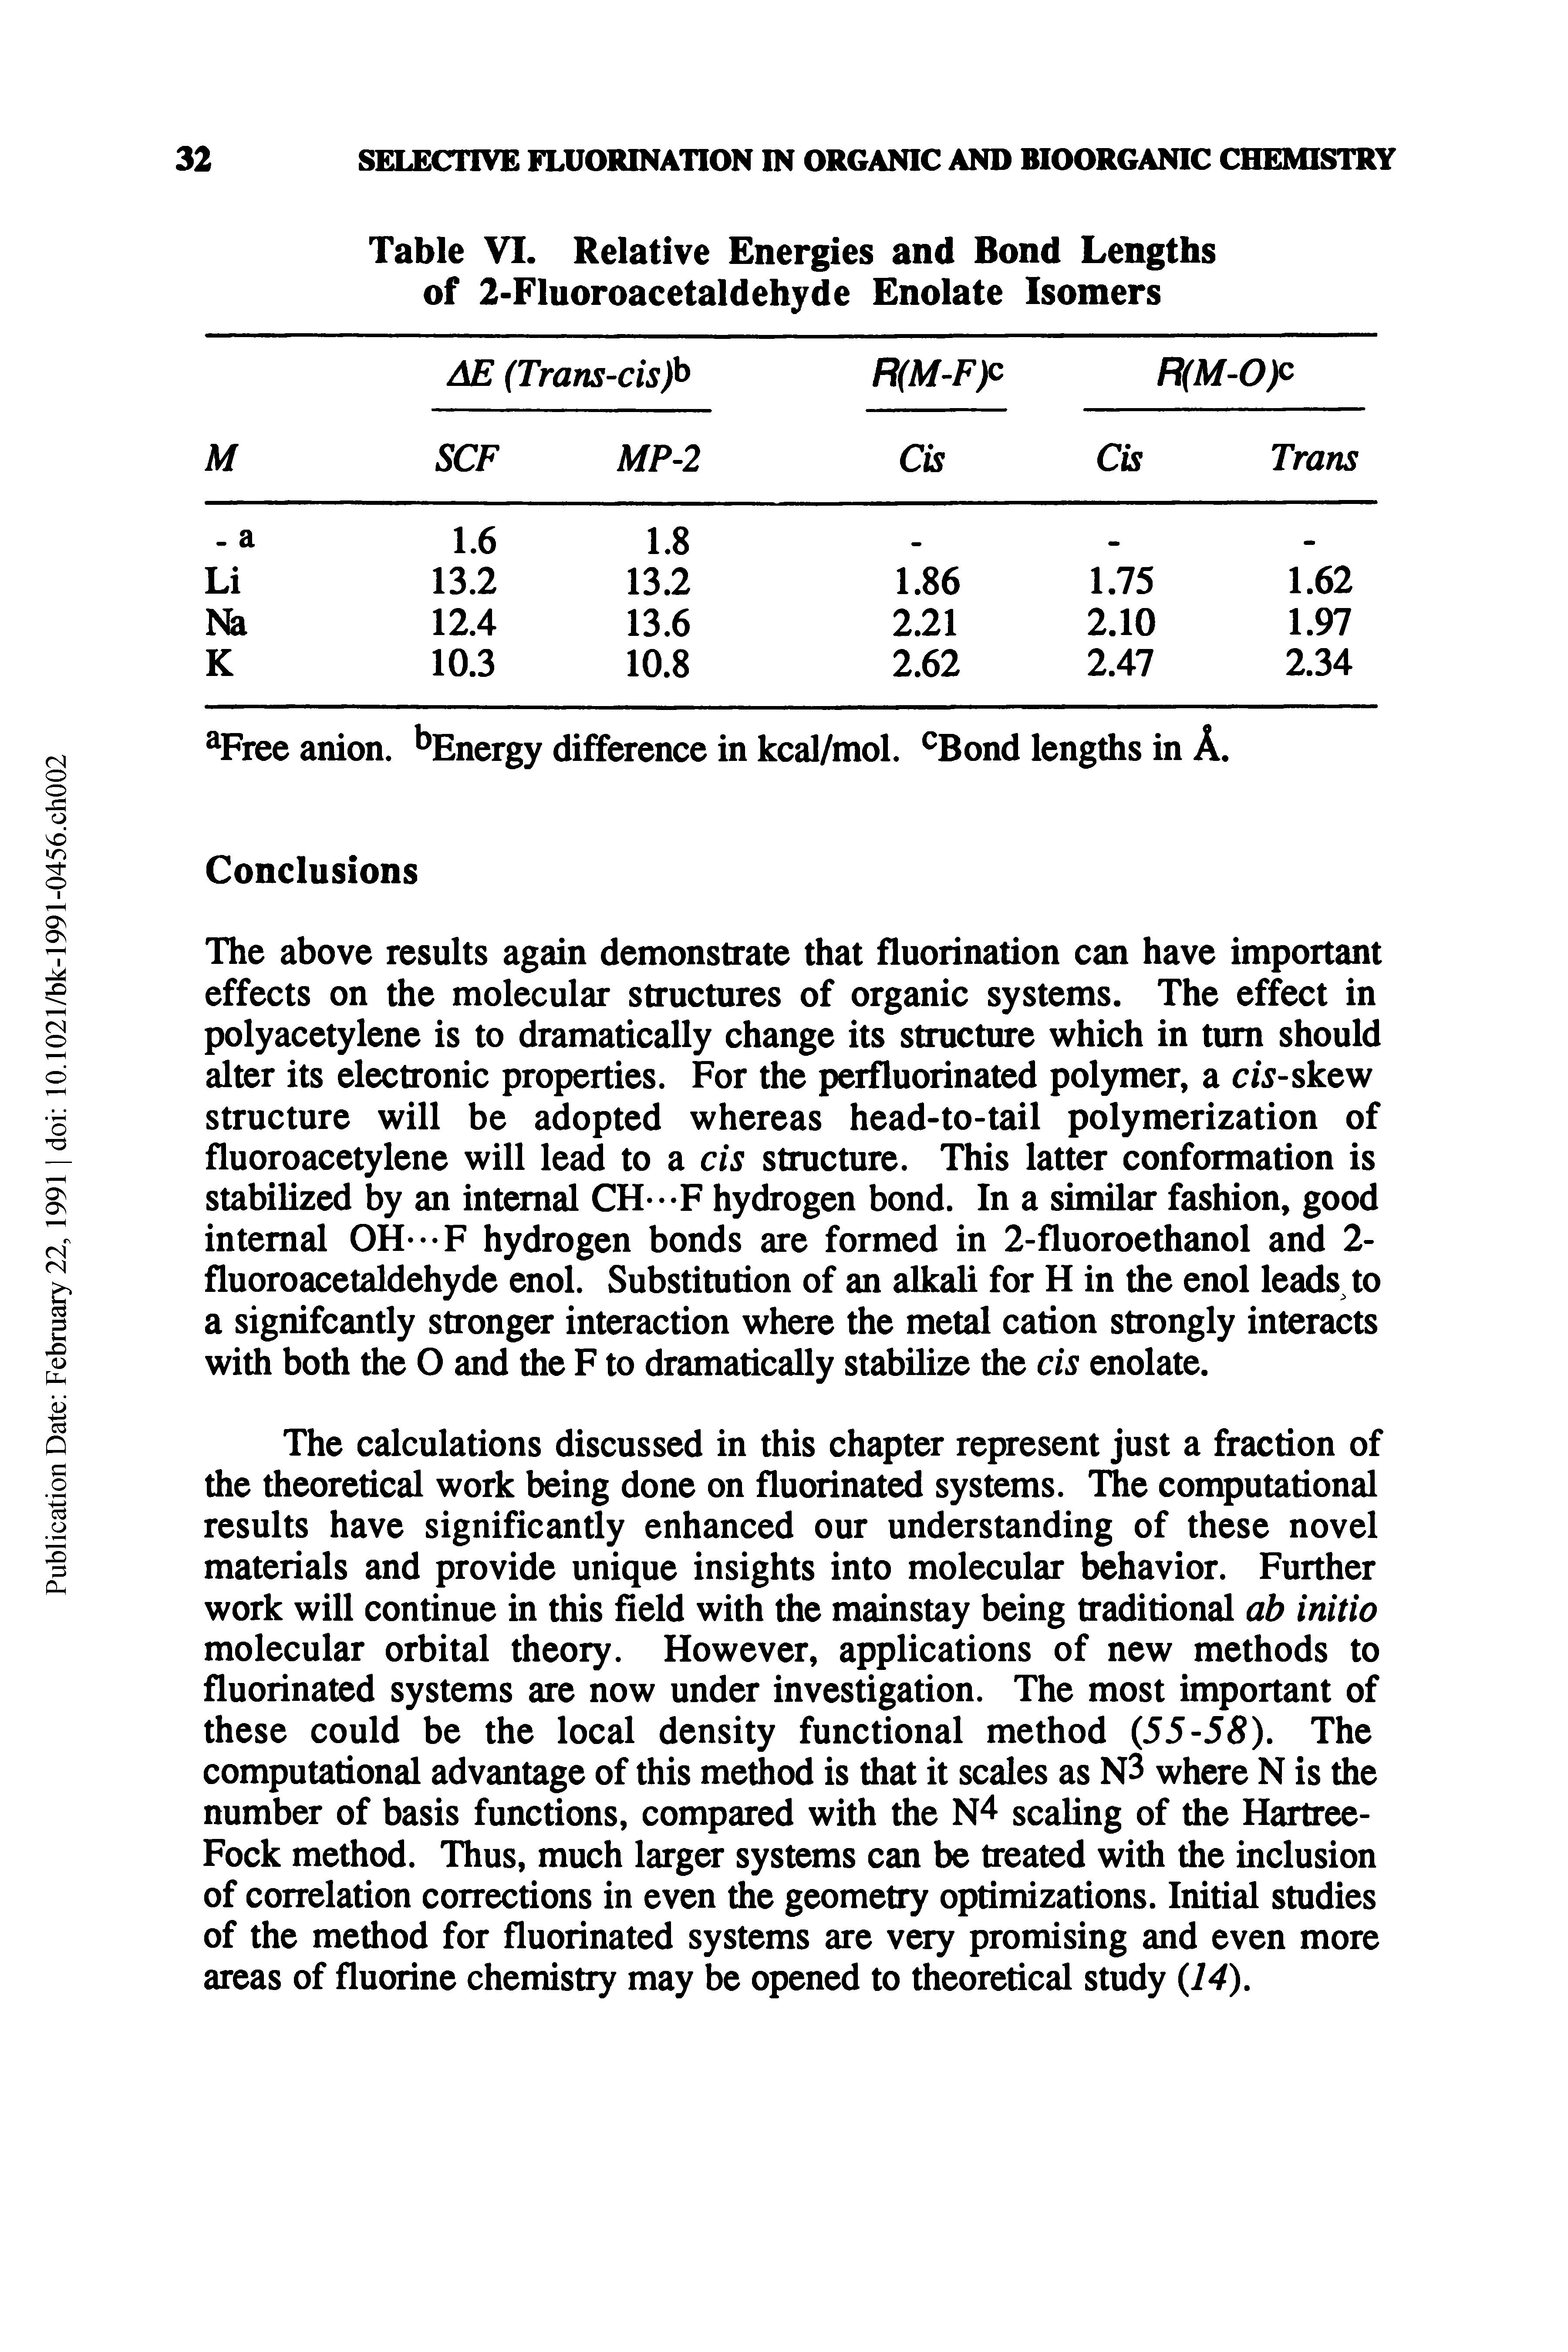 Table VI. Relative Energies and Bond Lengths of 2-Fluoroacetaldehyde Enolate Isomers...